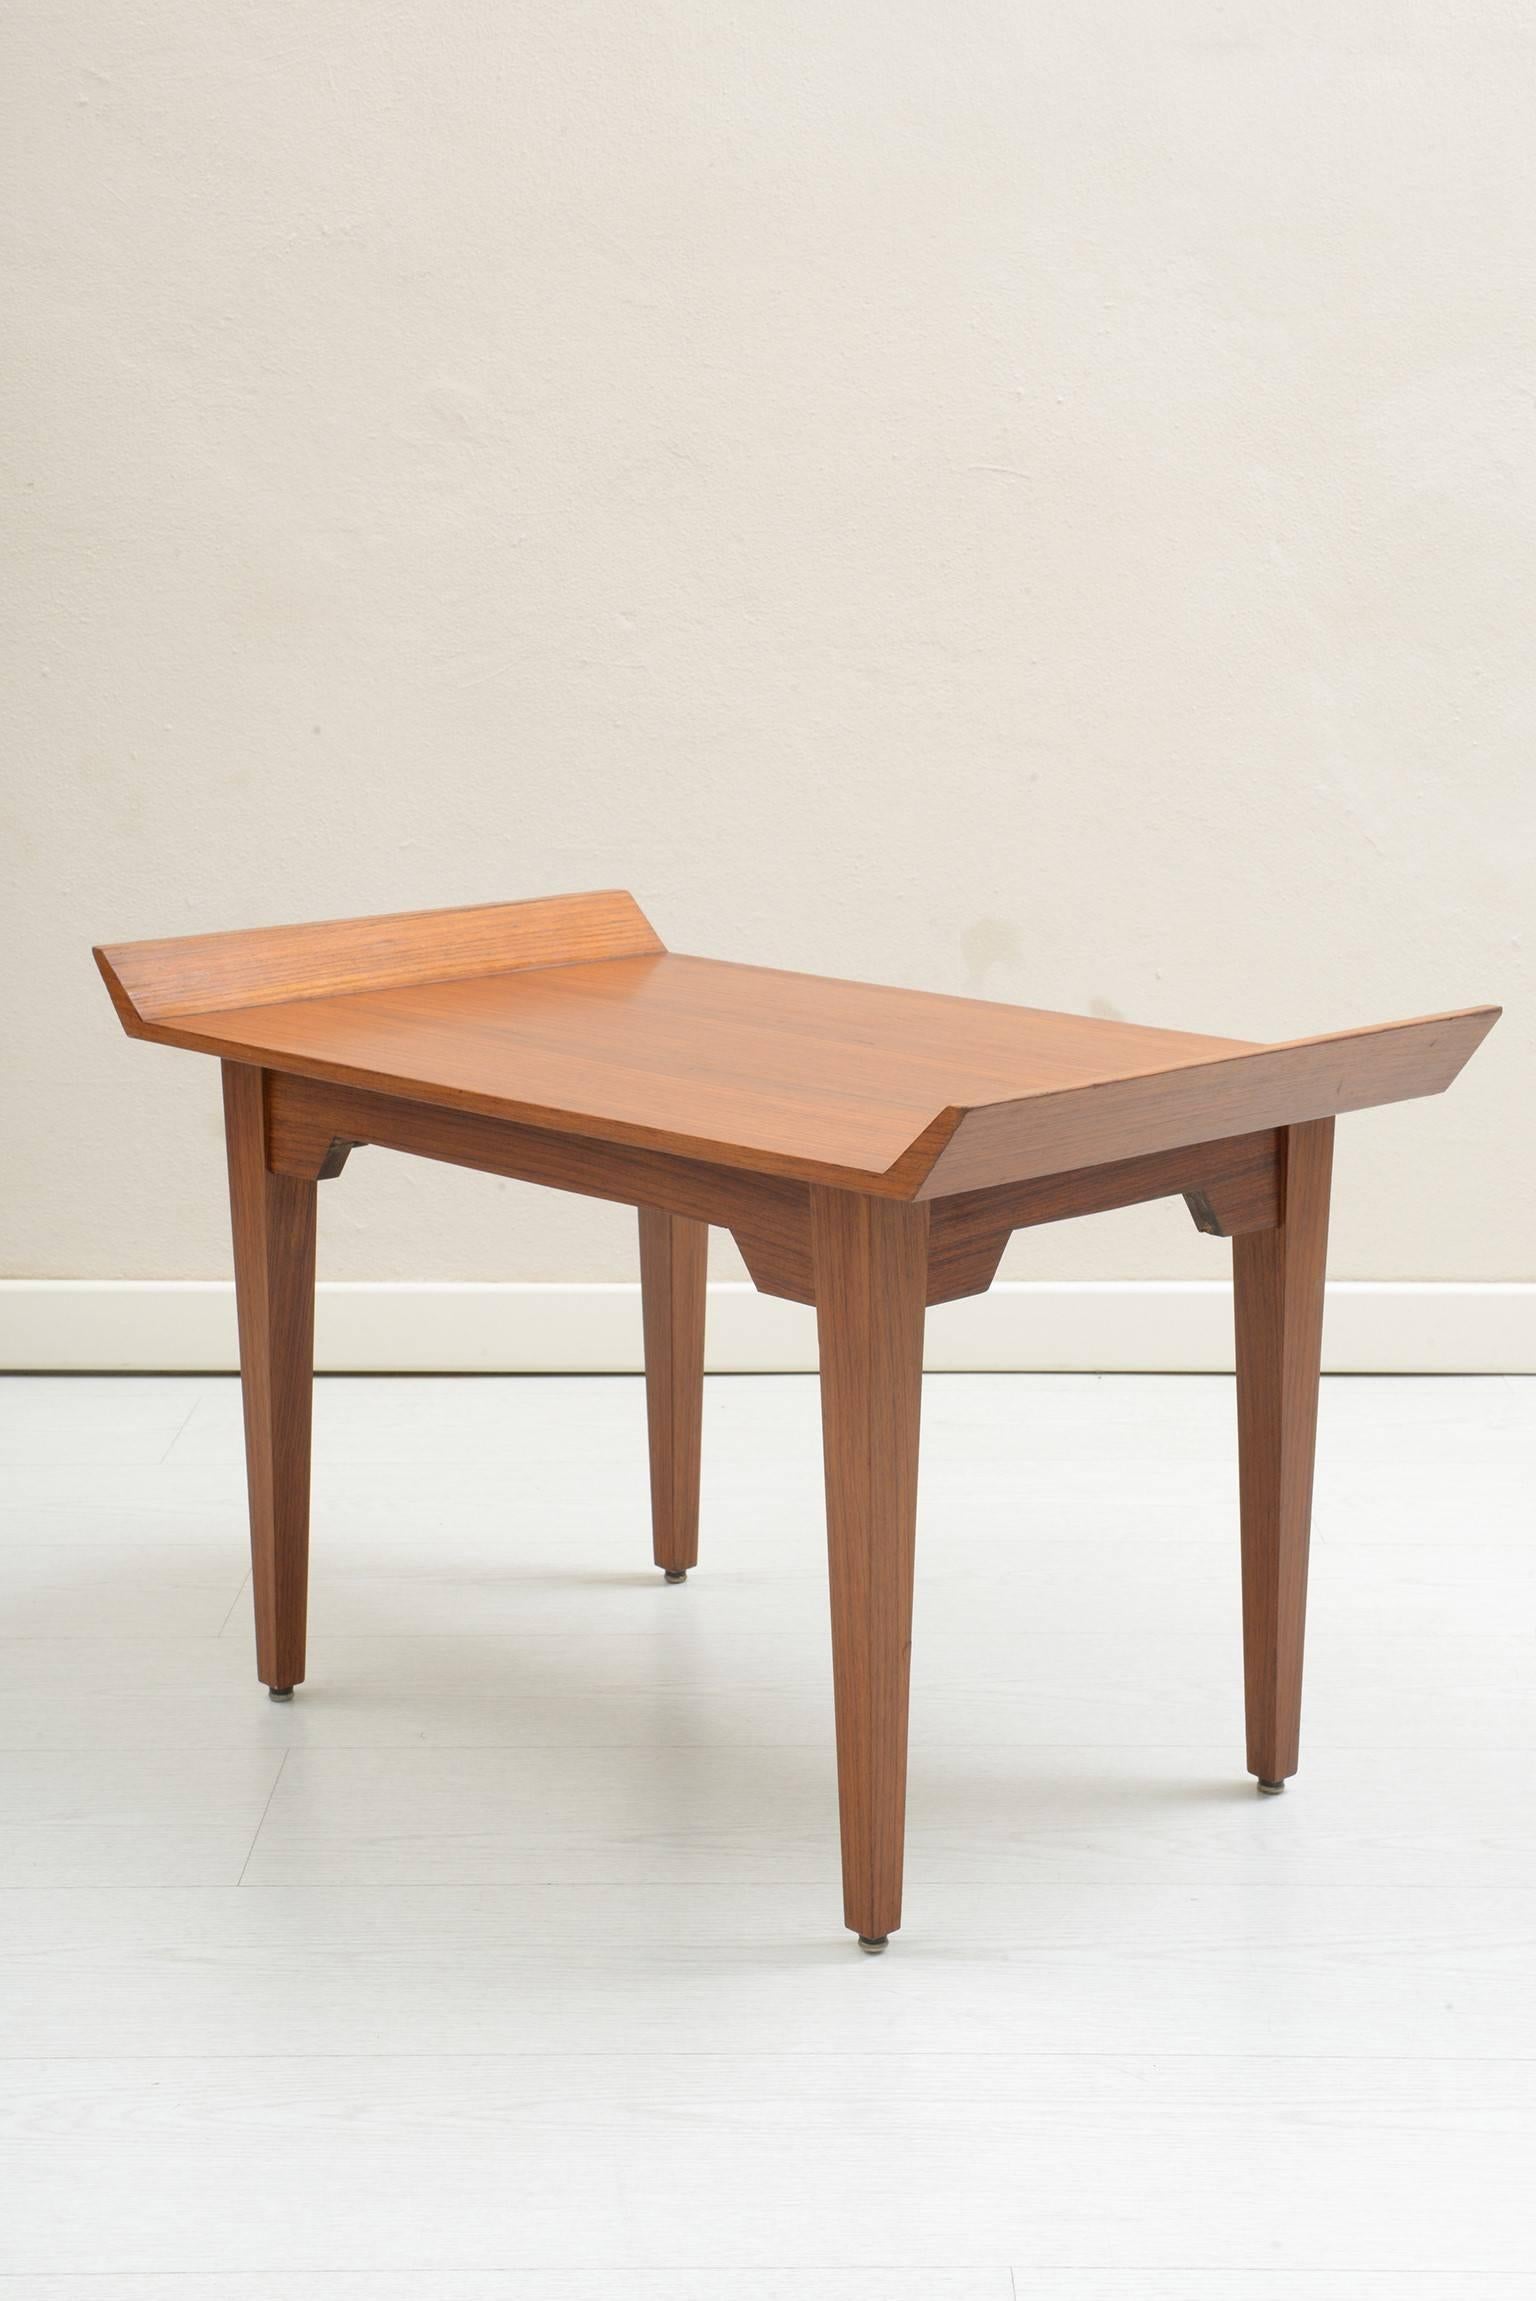 Elegant simple shaped teak wood pair of stools or side table.
Italy, 1960s.